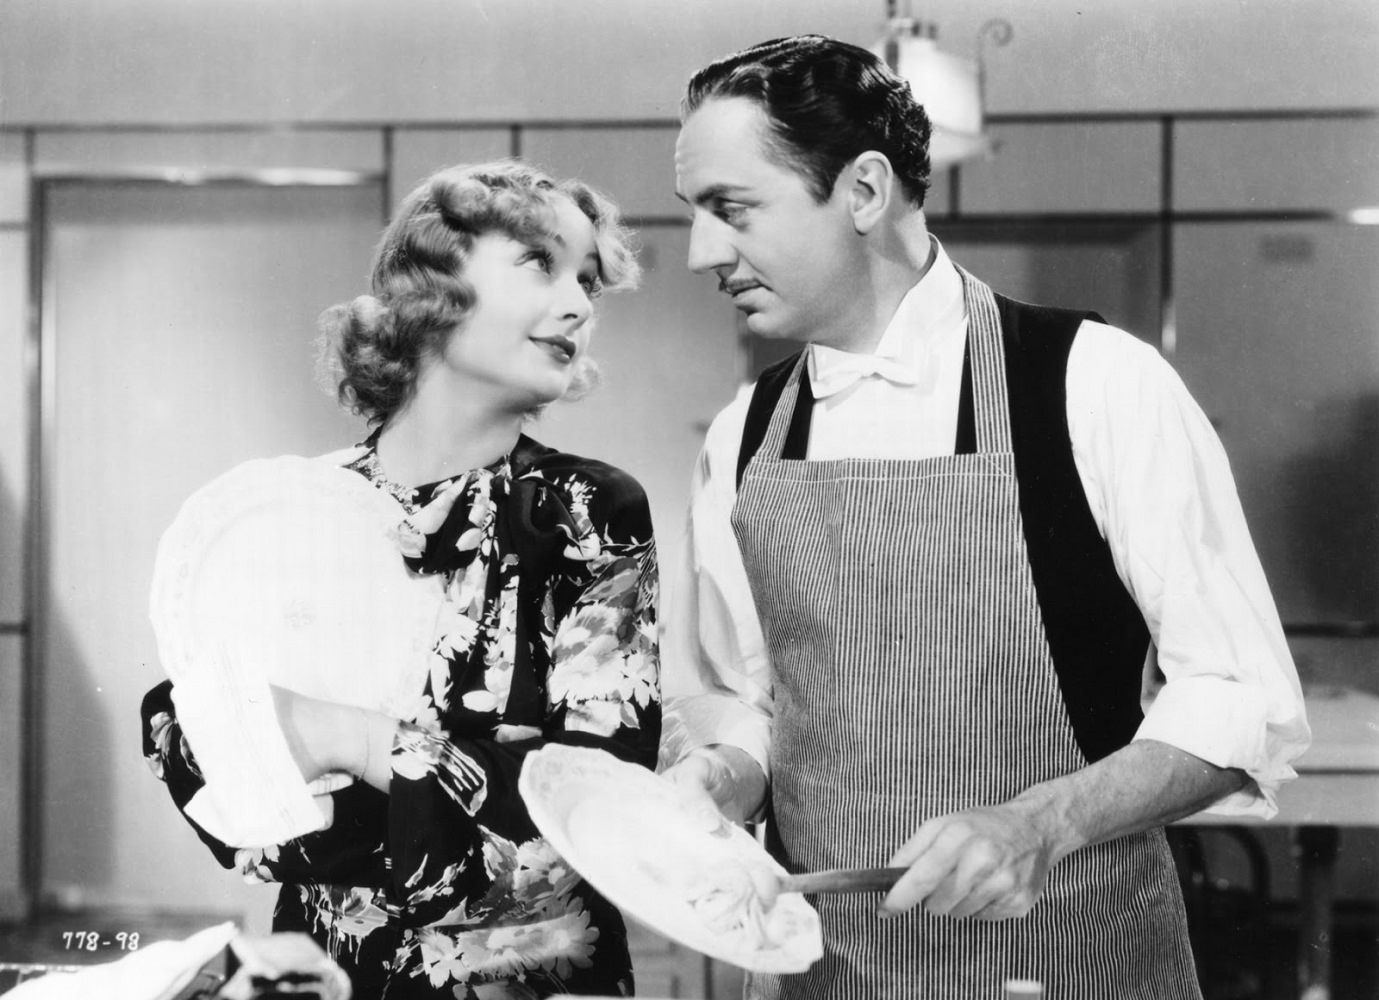 Carole Lombard and William Powelll in My man Godfrey, 1936